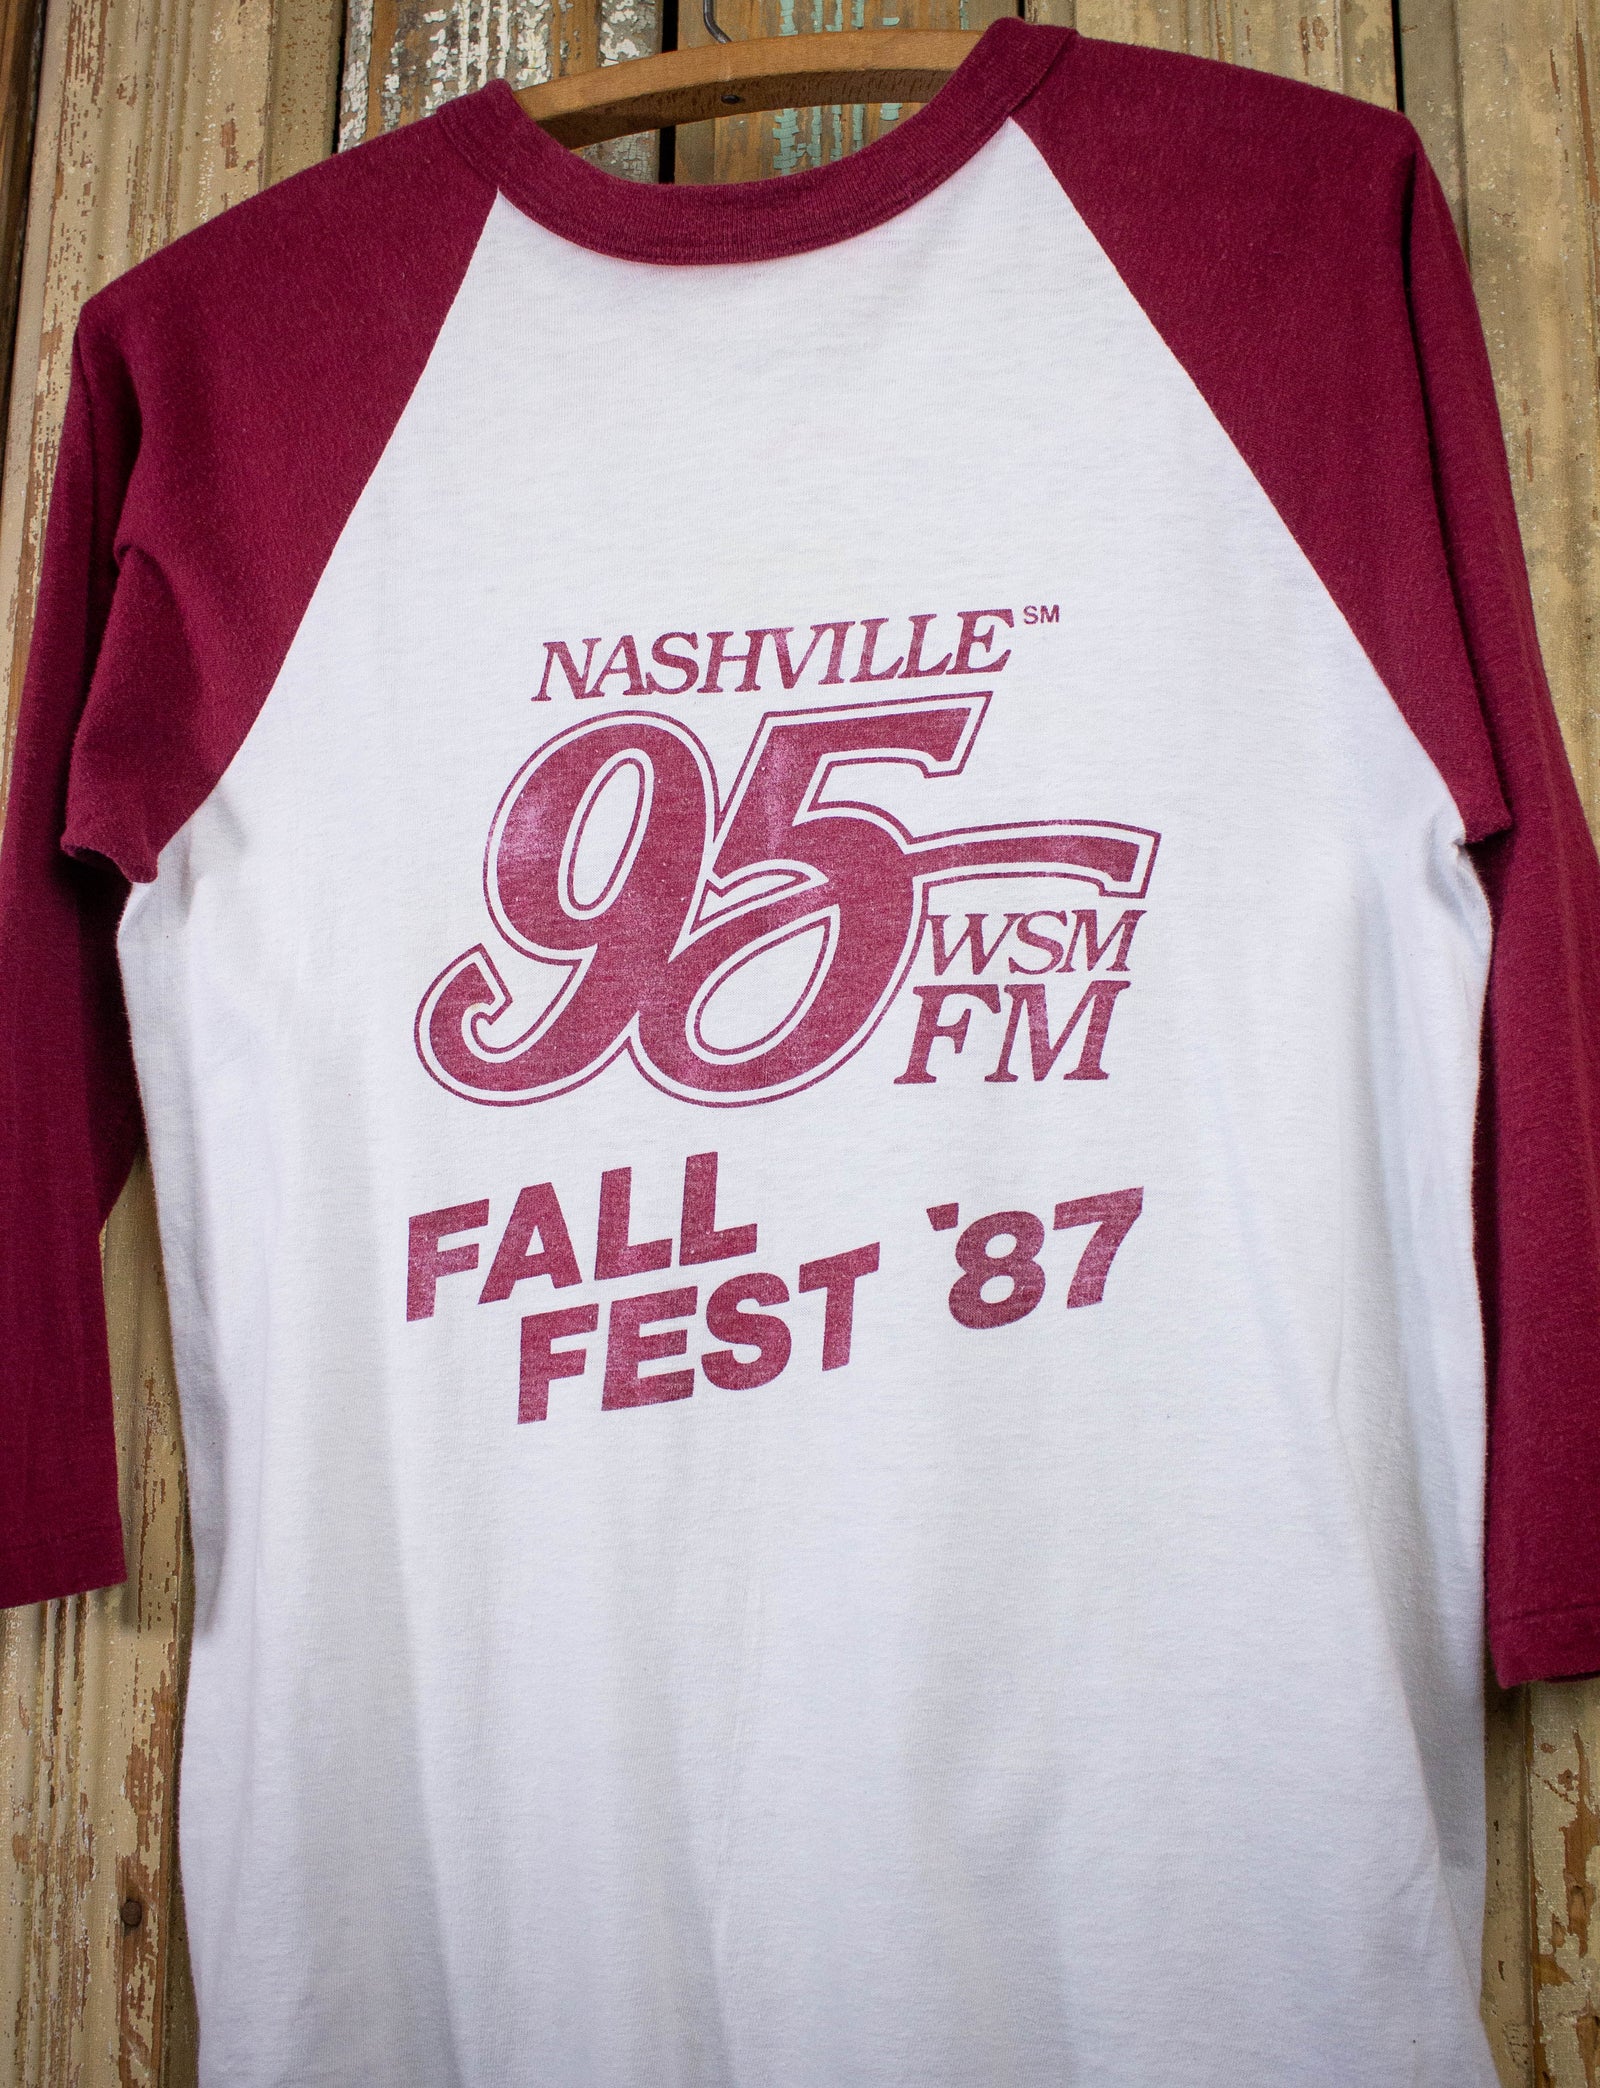 Vintage Marathon Shirt Design Nashville Design Nashville 